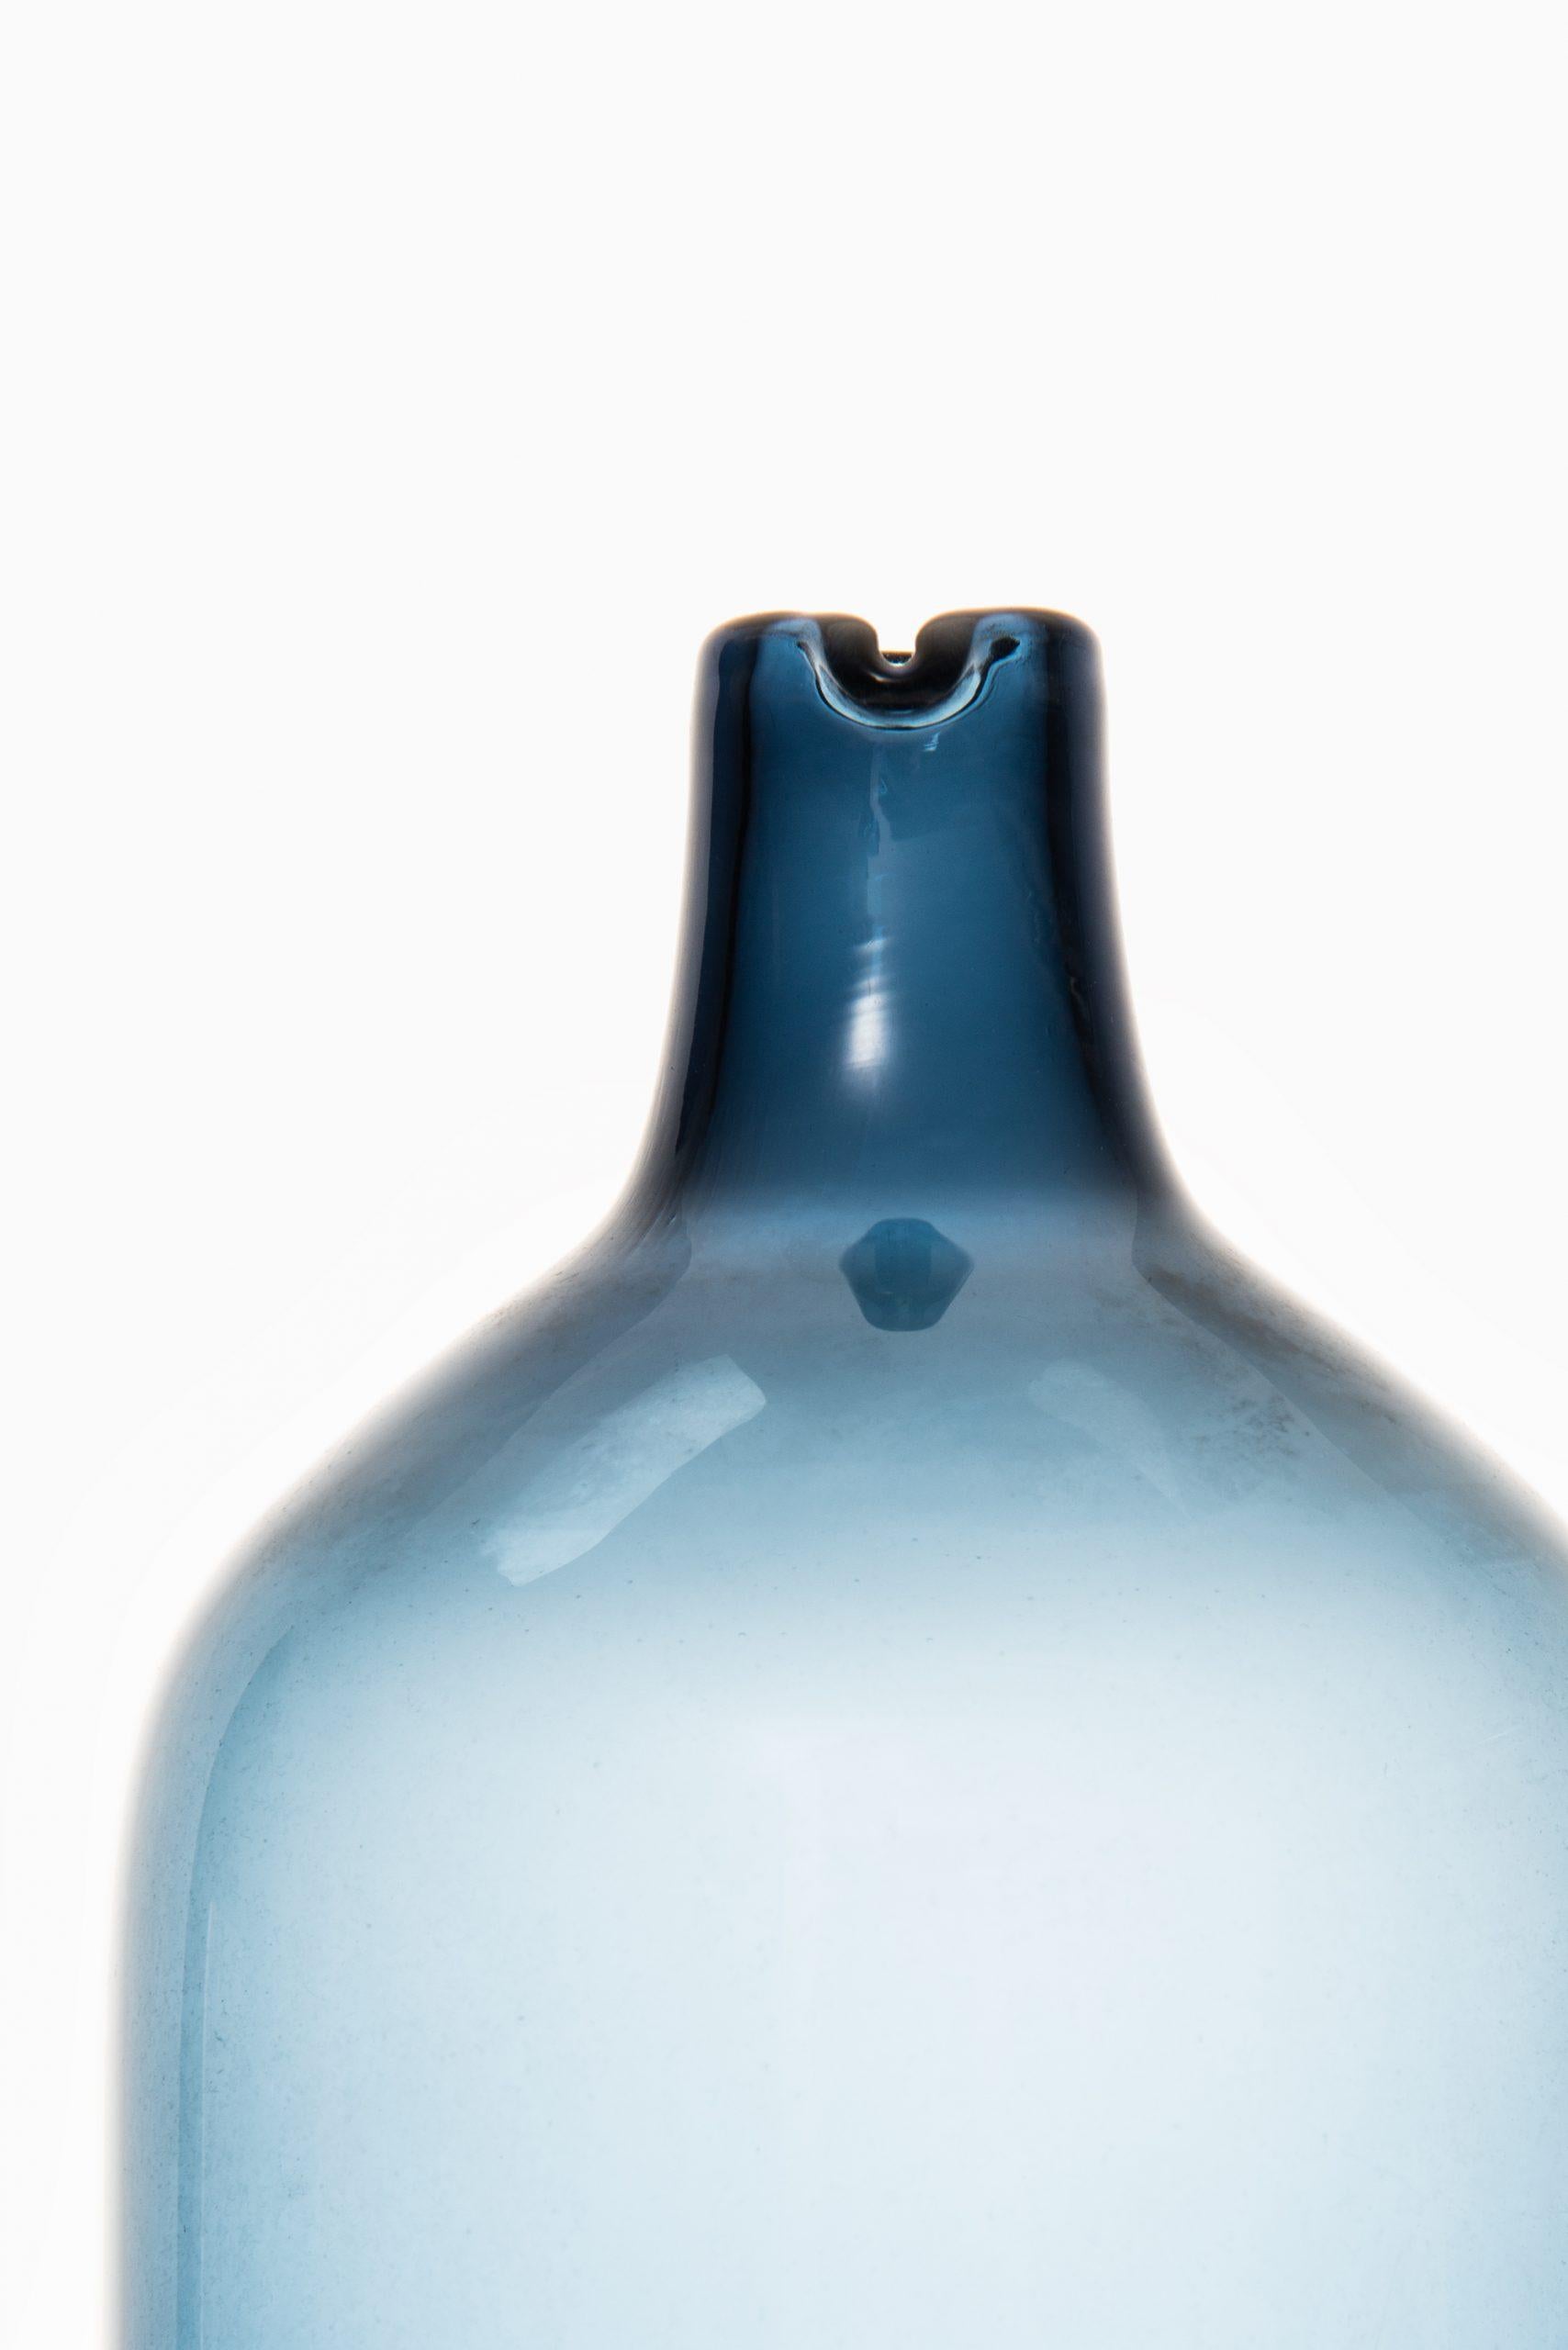 Glass bottle / vase model Pullo / Bird vase designed by Timo Sarpaneva. Produced by Iittala in Finland. 